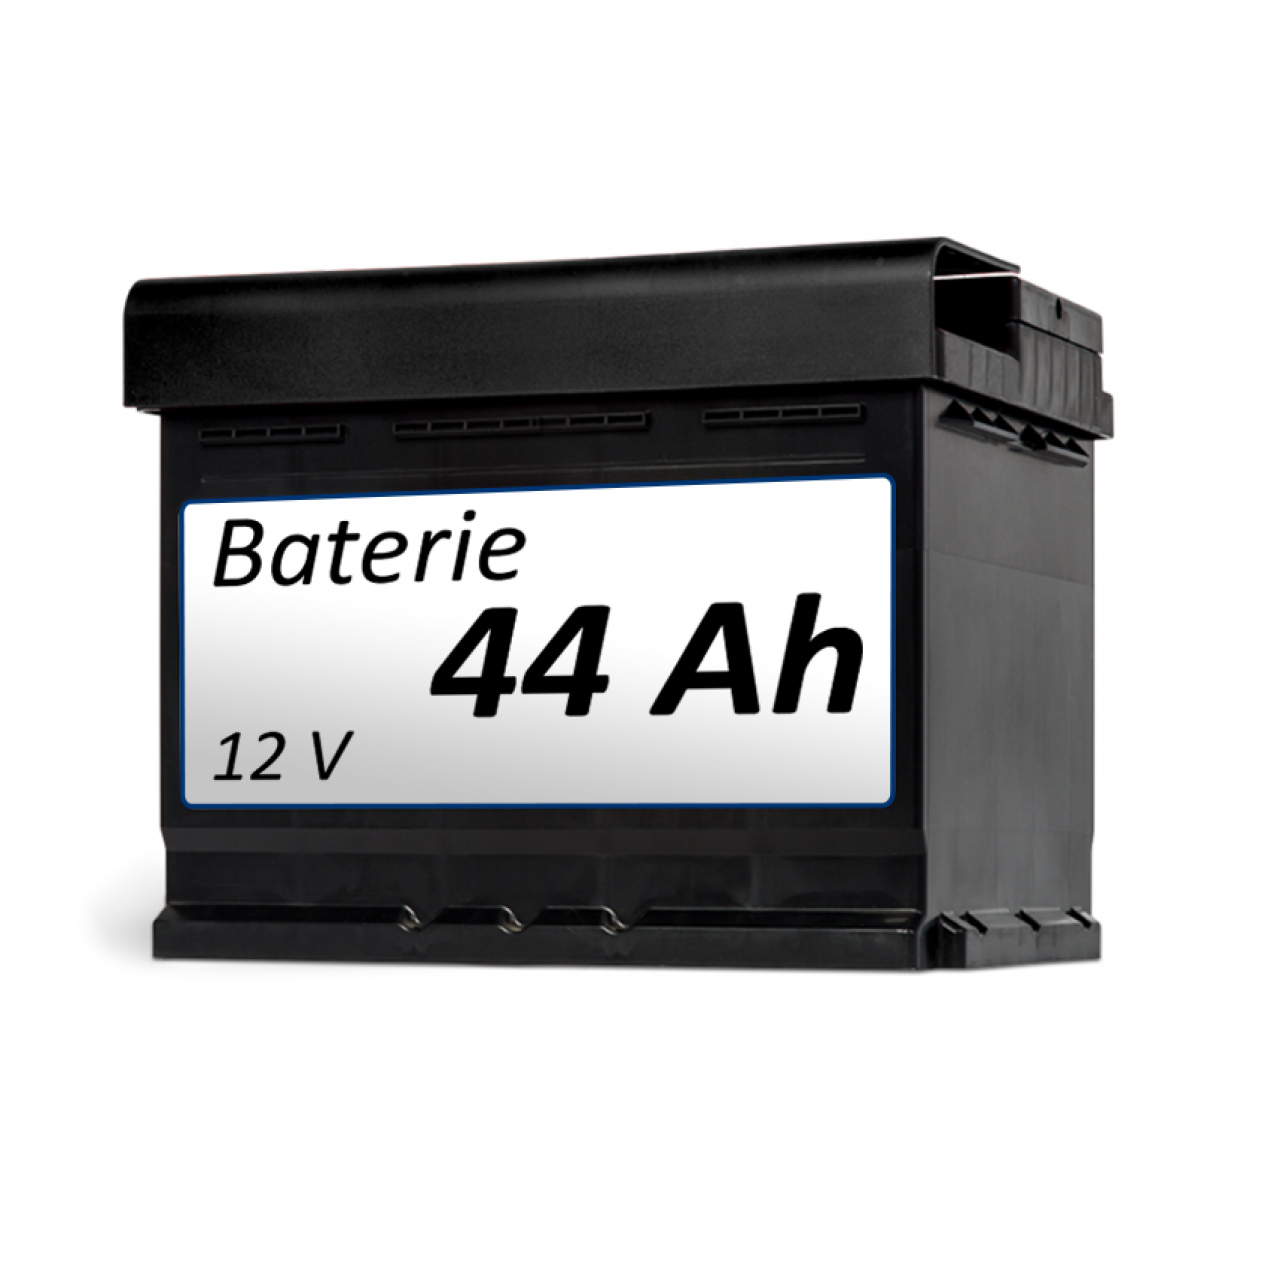 Baterie Batéria 44 Ah - samostatne foto